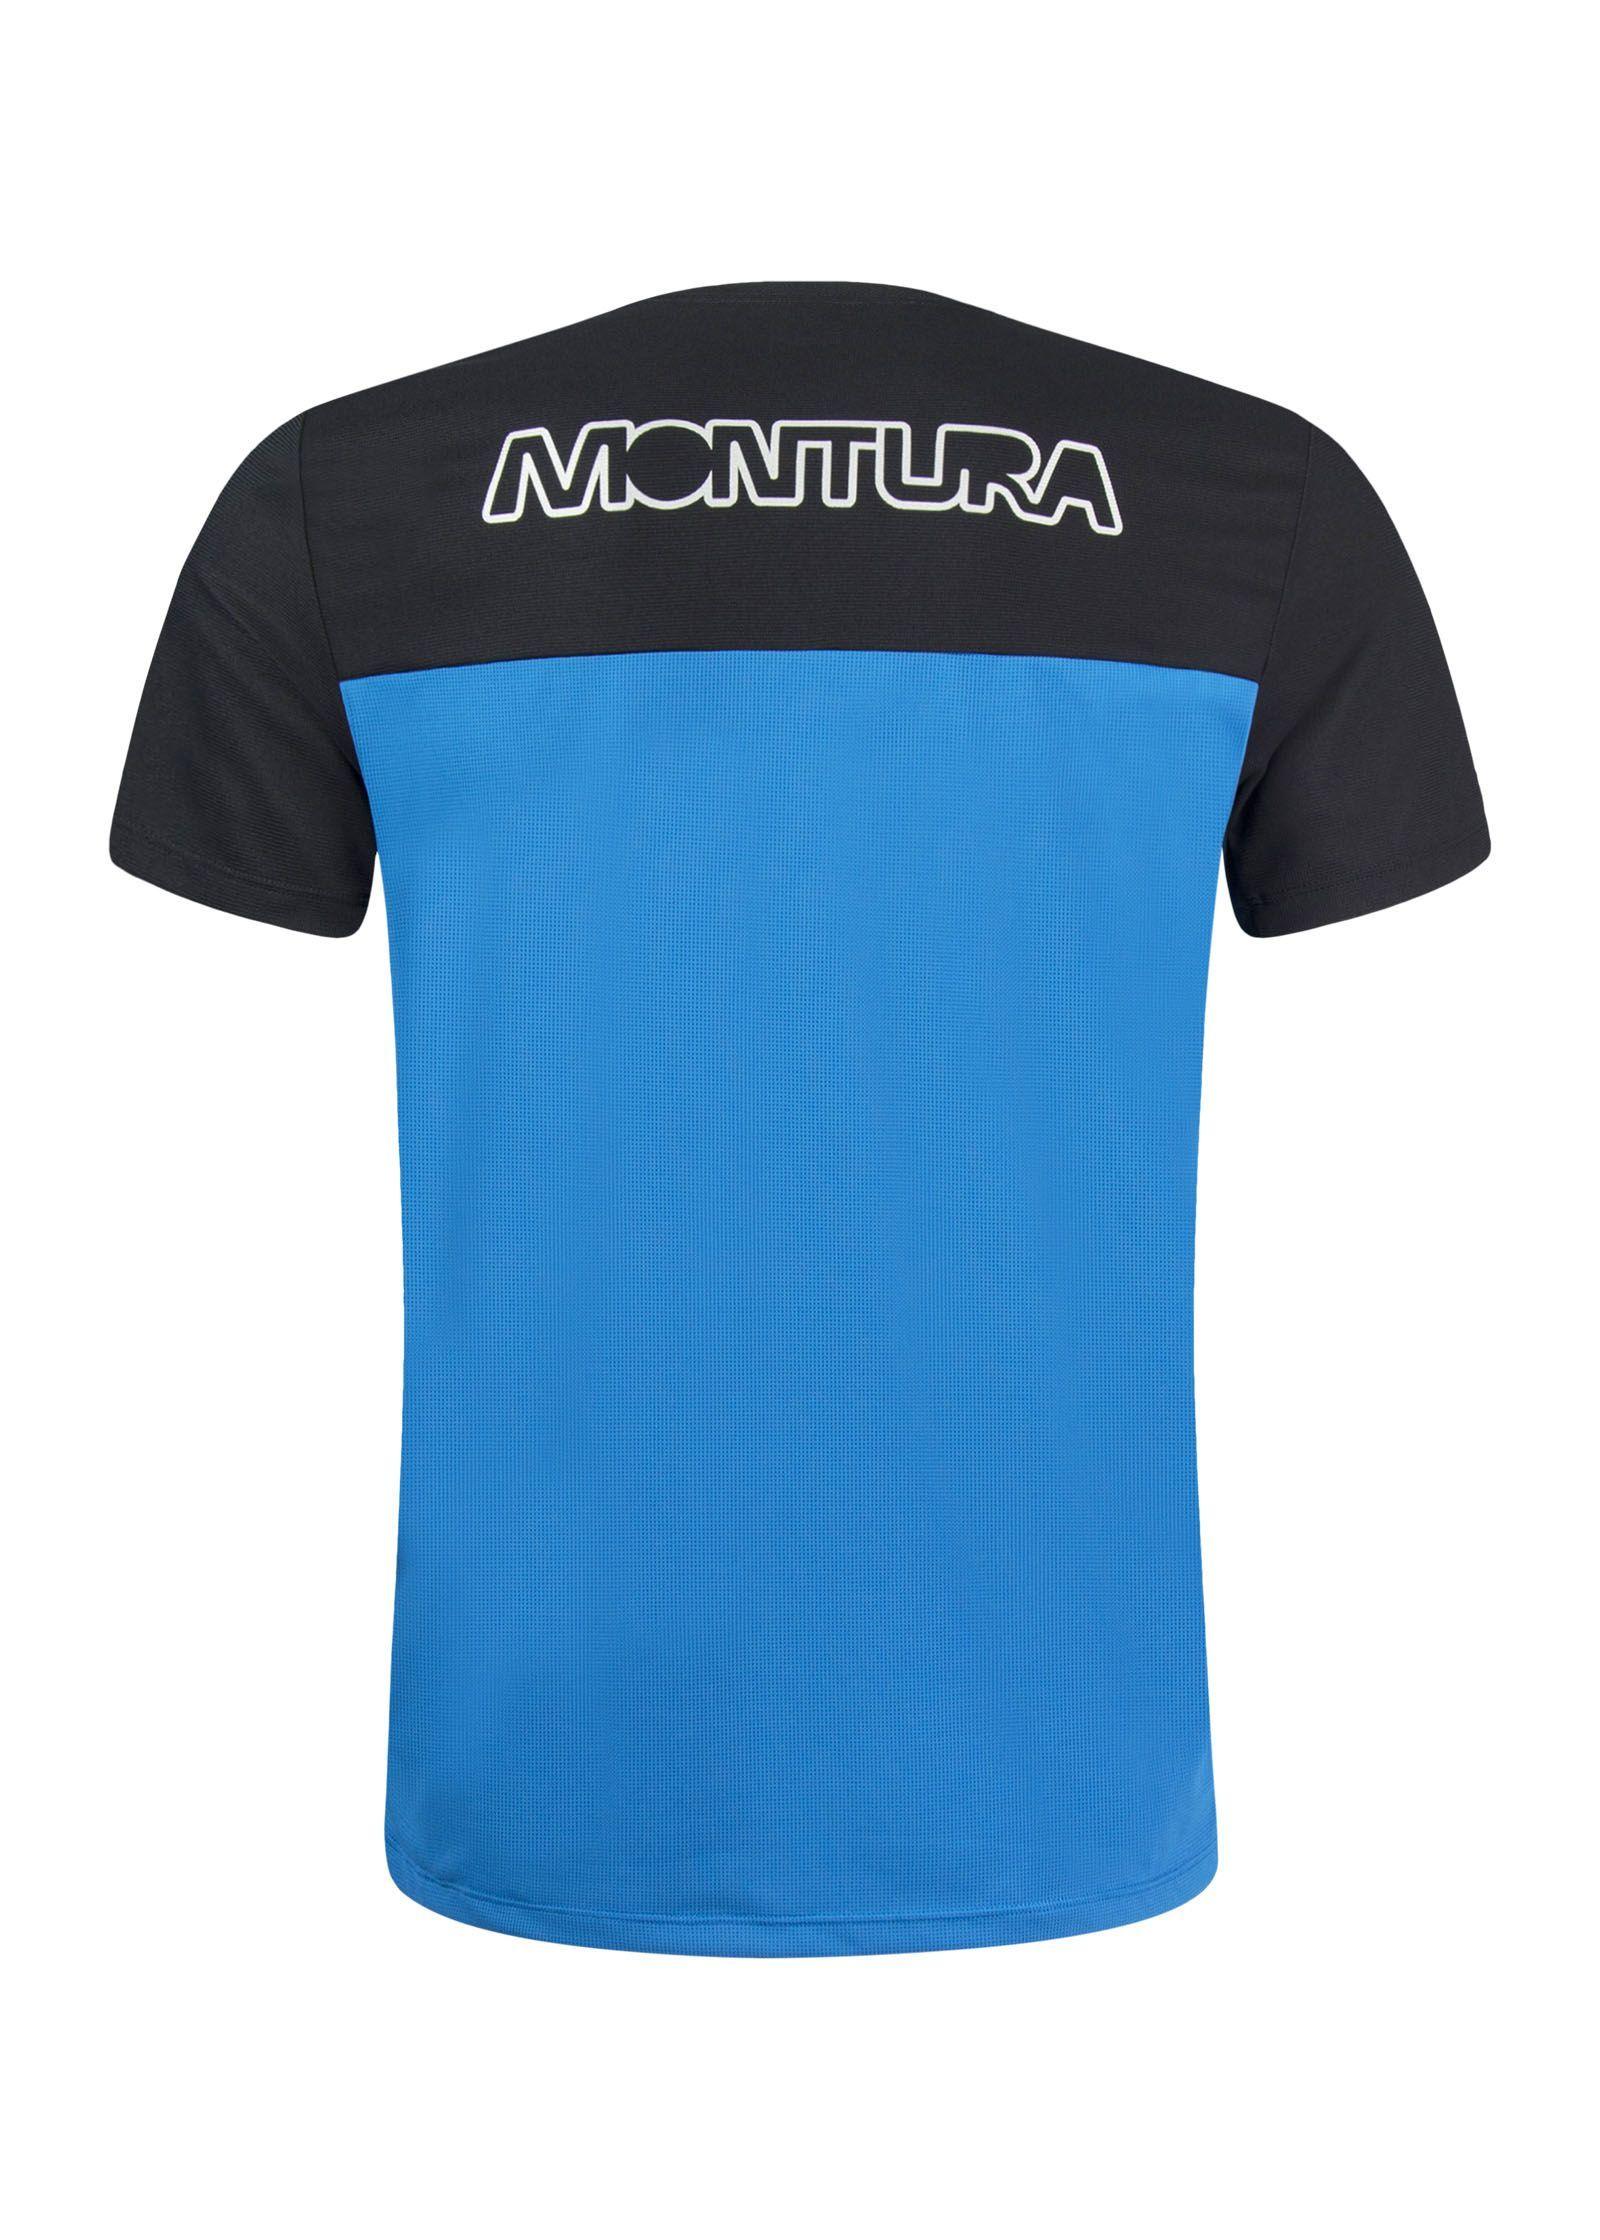 Montura | T-shirt Outdoor 20 Uomo Celeste - Fabbrica Ski Sises